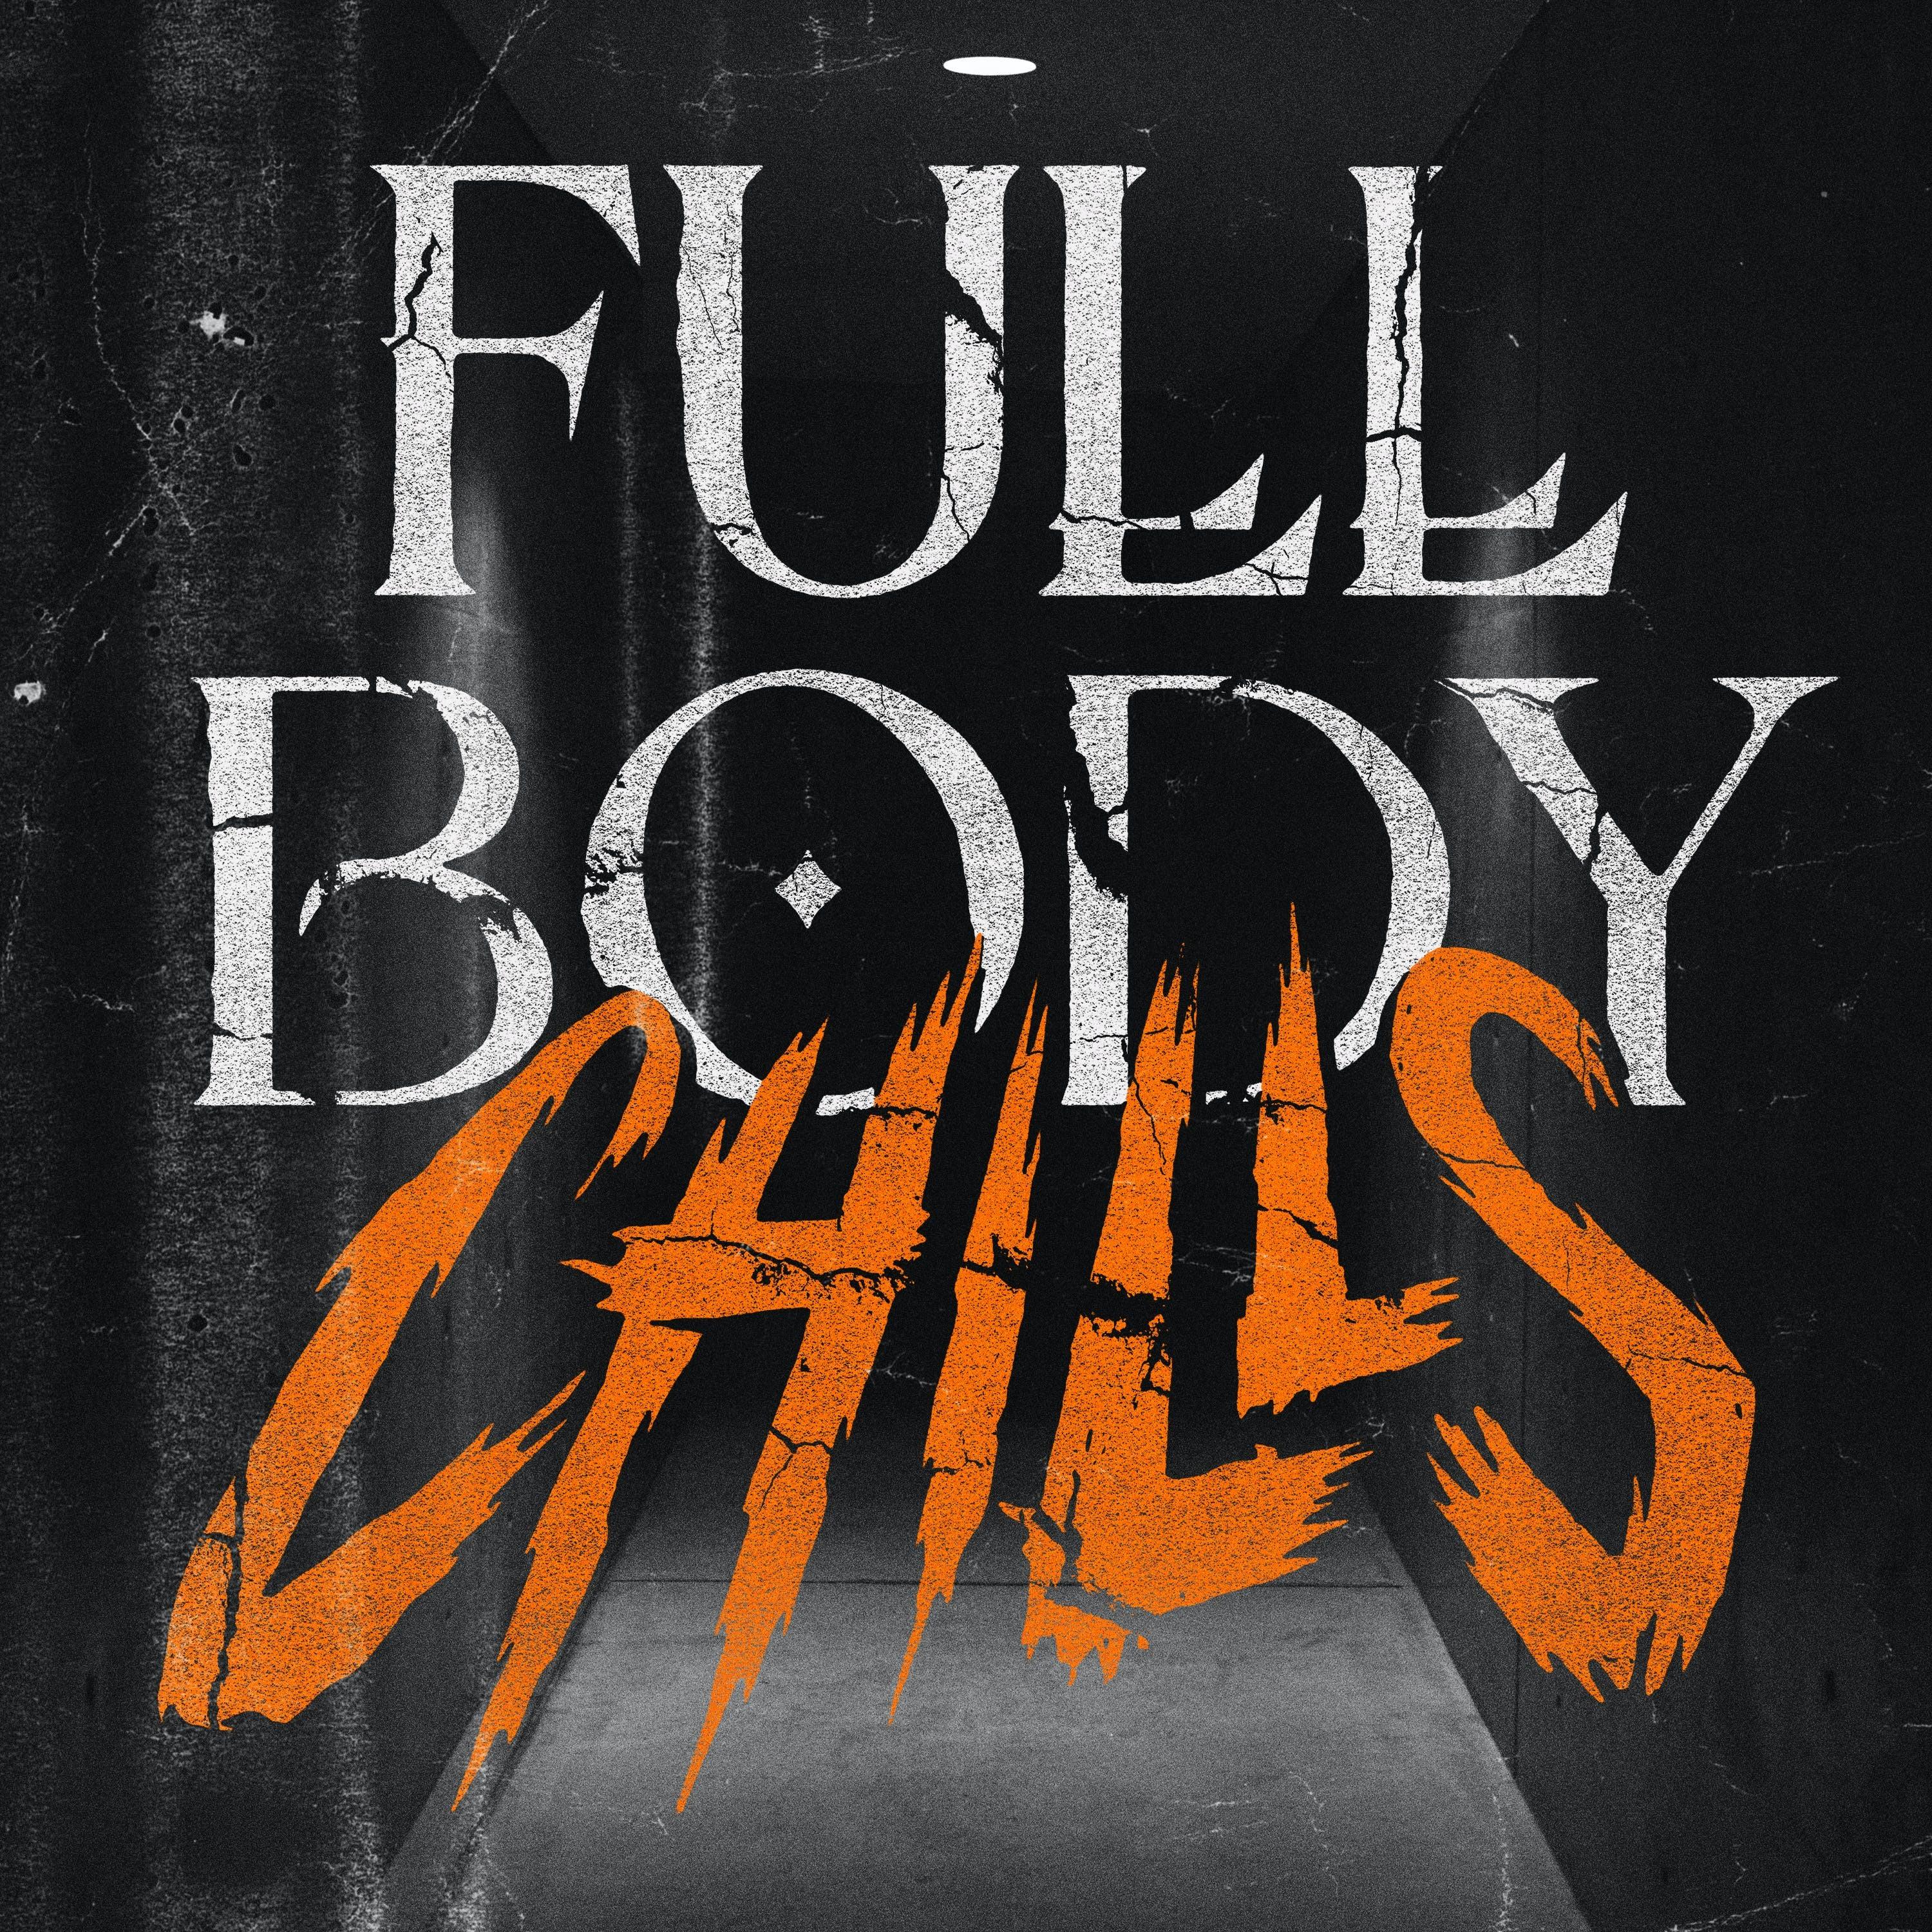 Show poster of Full Body Chills